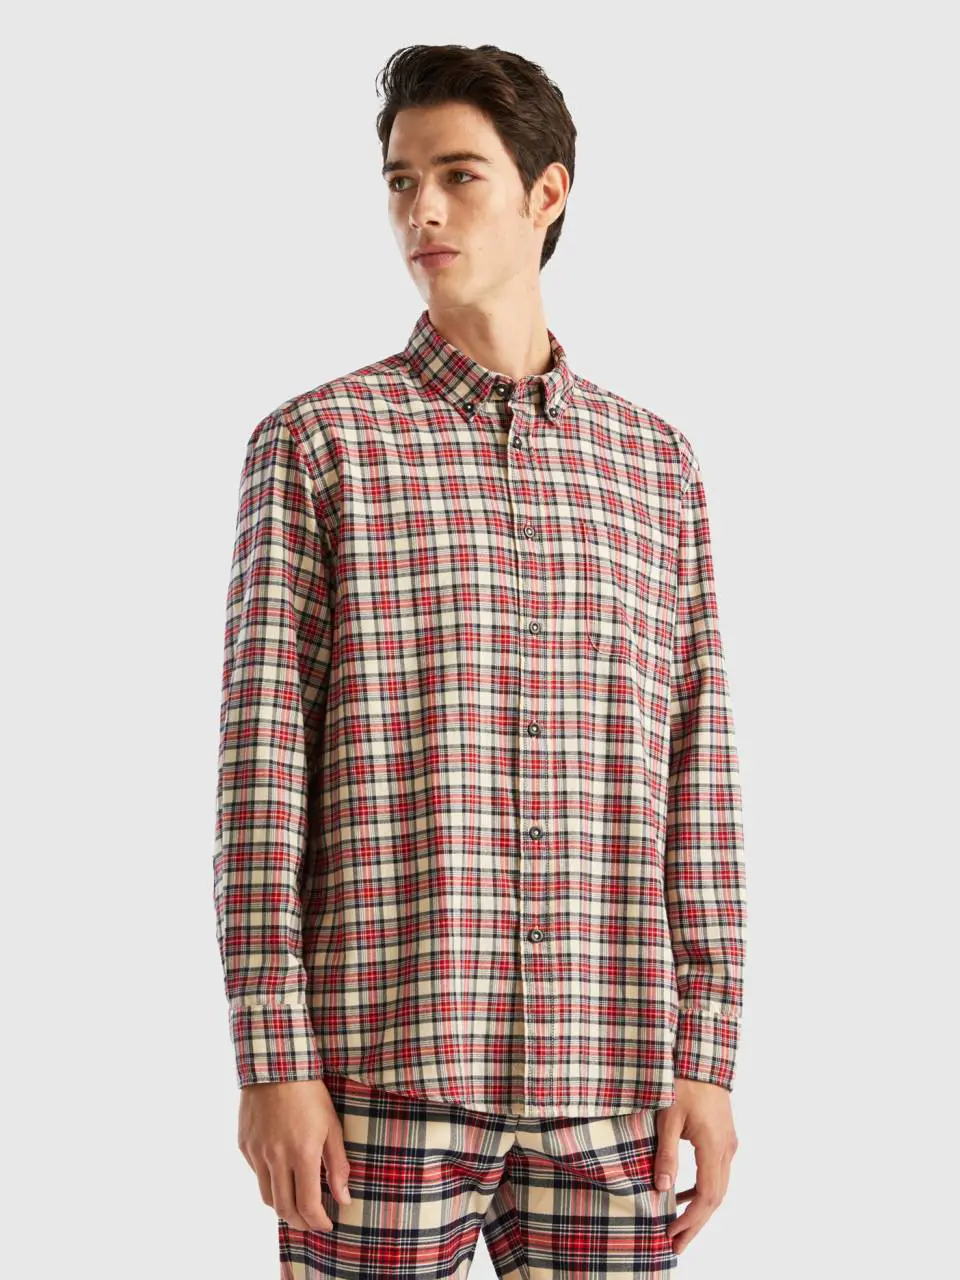 Benetton check flannel shirt. 1